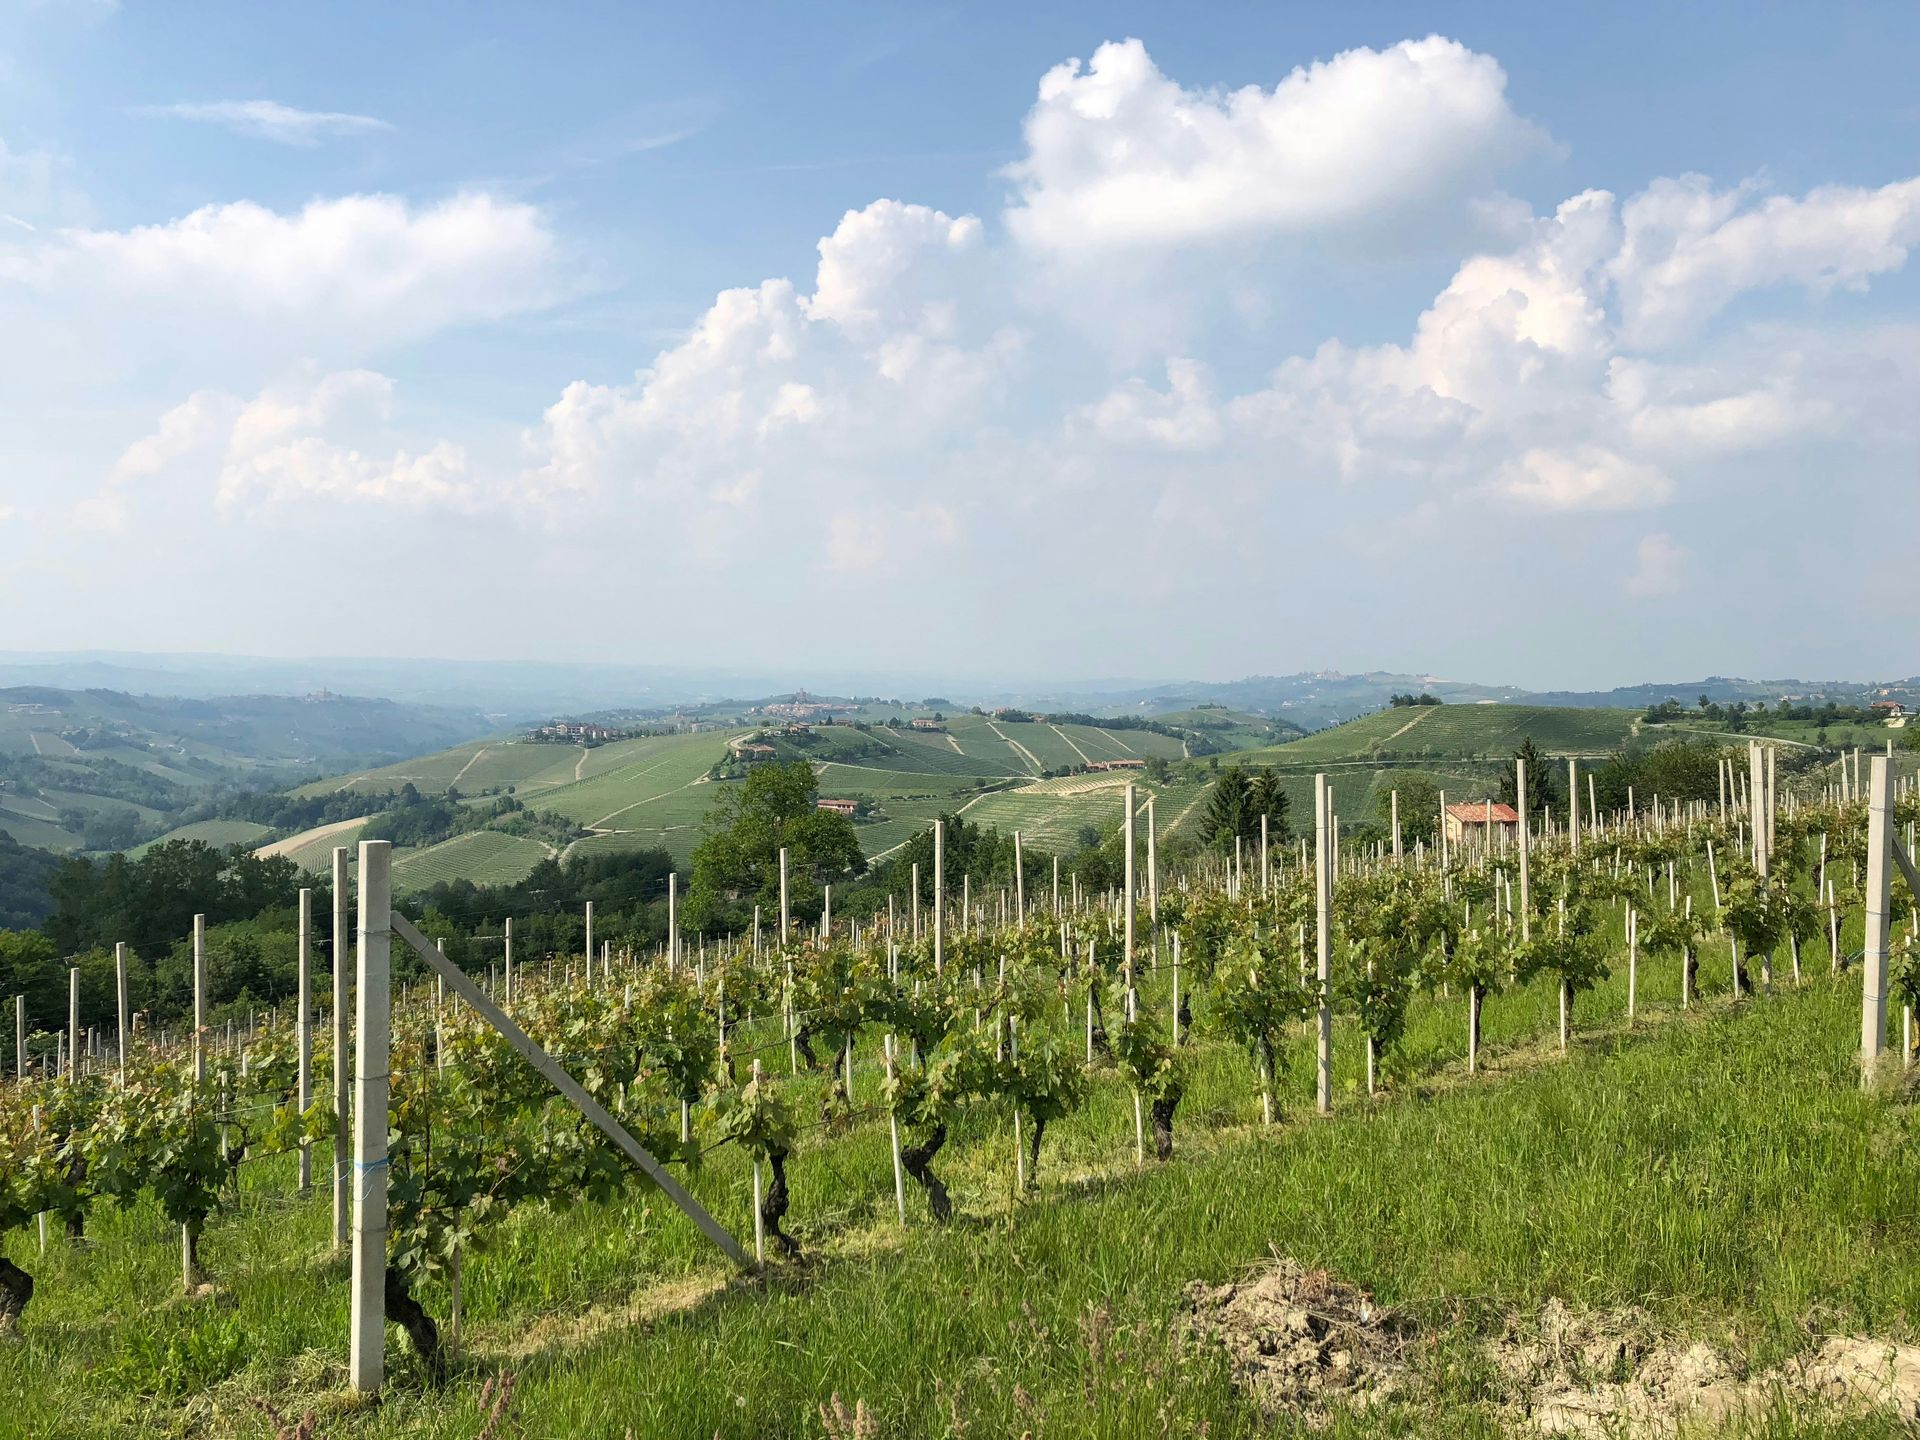 Vineyard Landscape of Piedmont